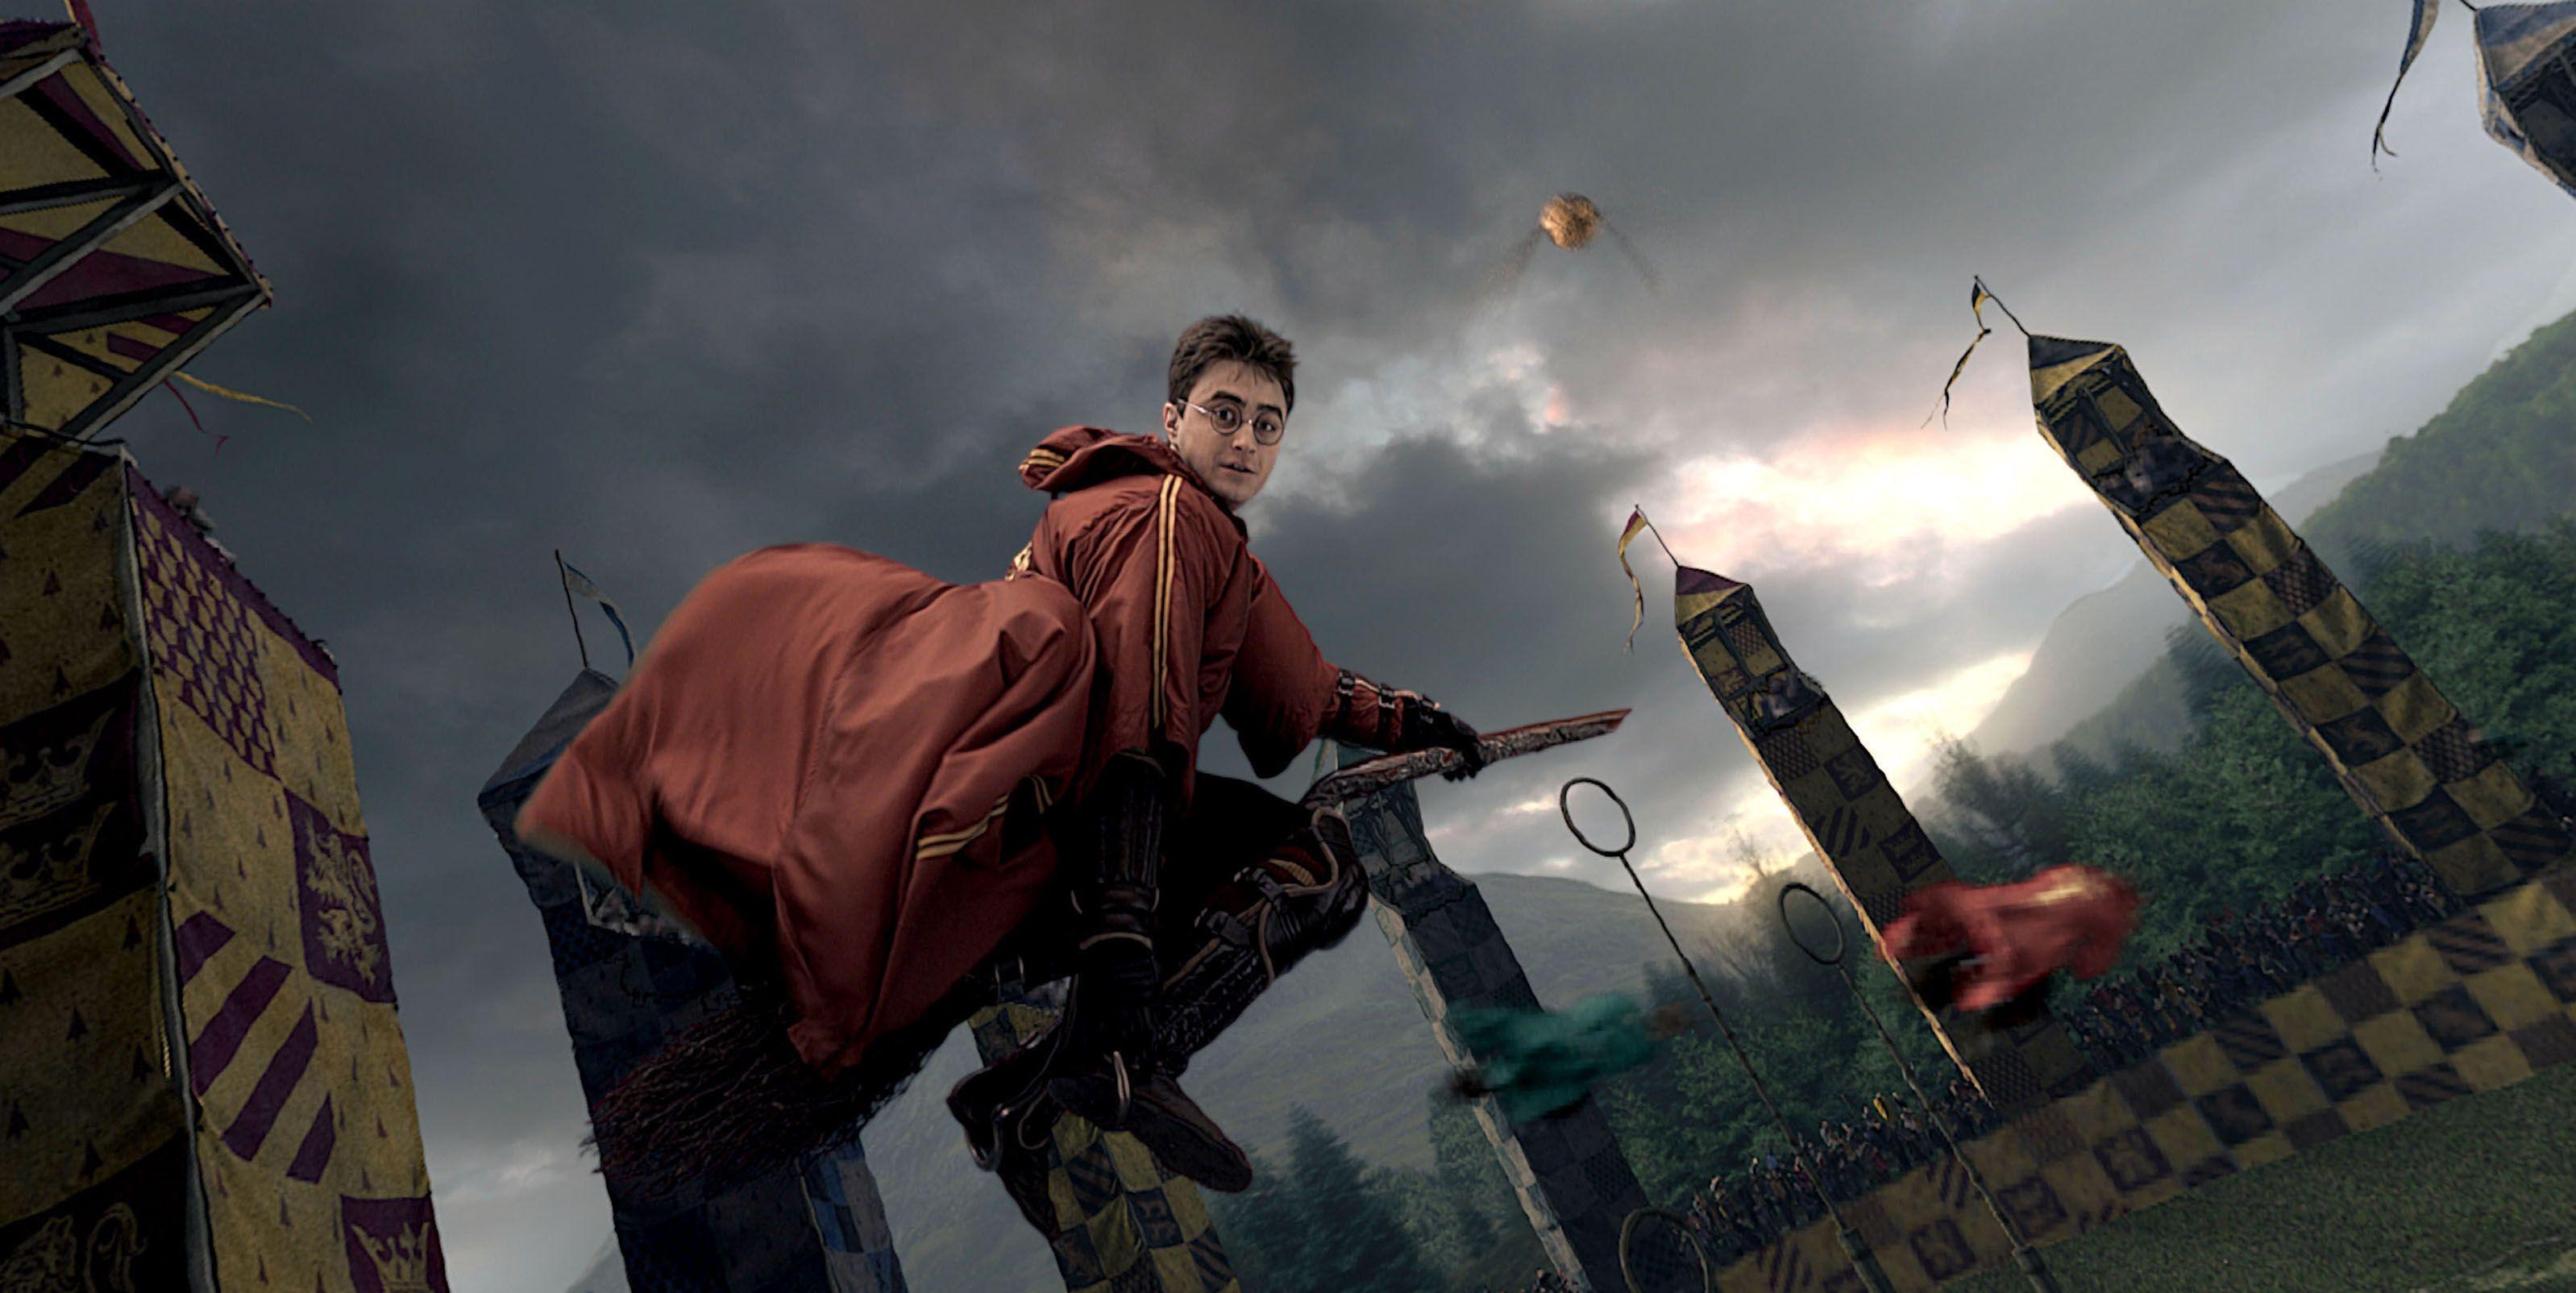 Which three students does Umbridge suspend from the Gryffindor quidditch team?